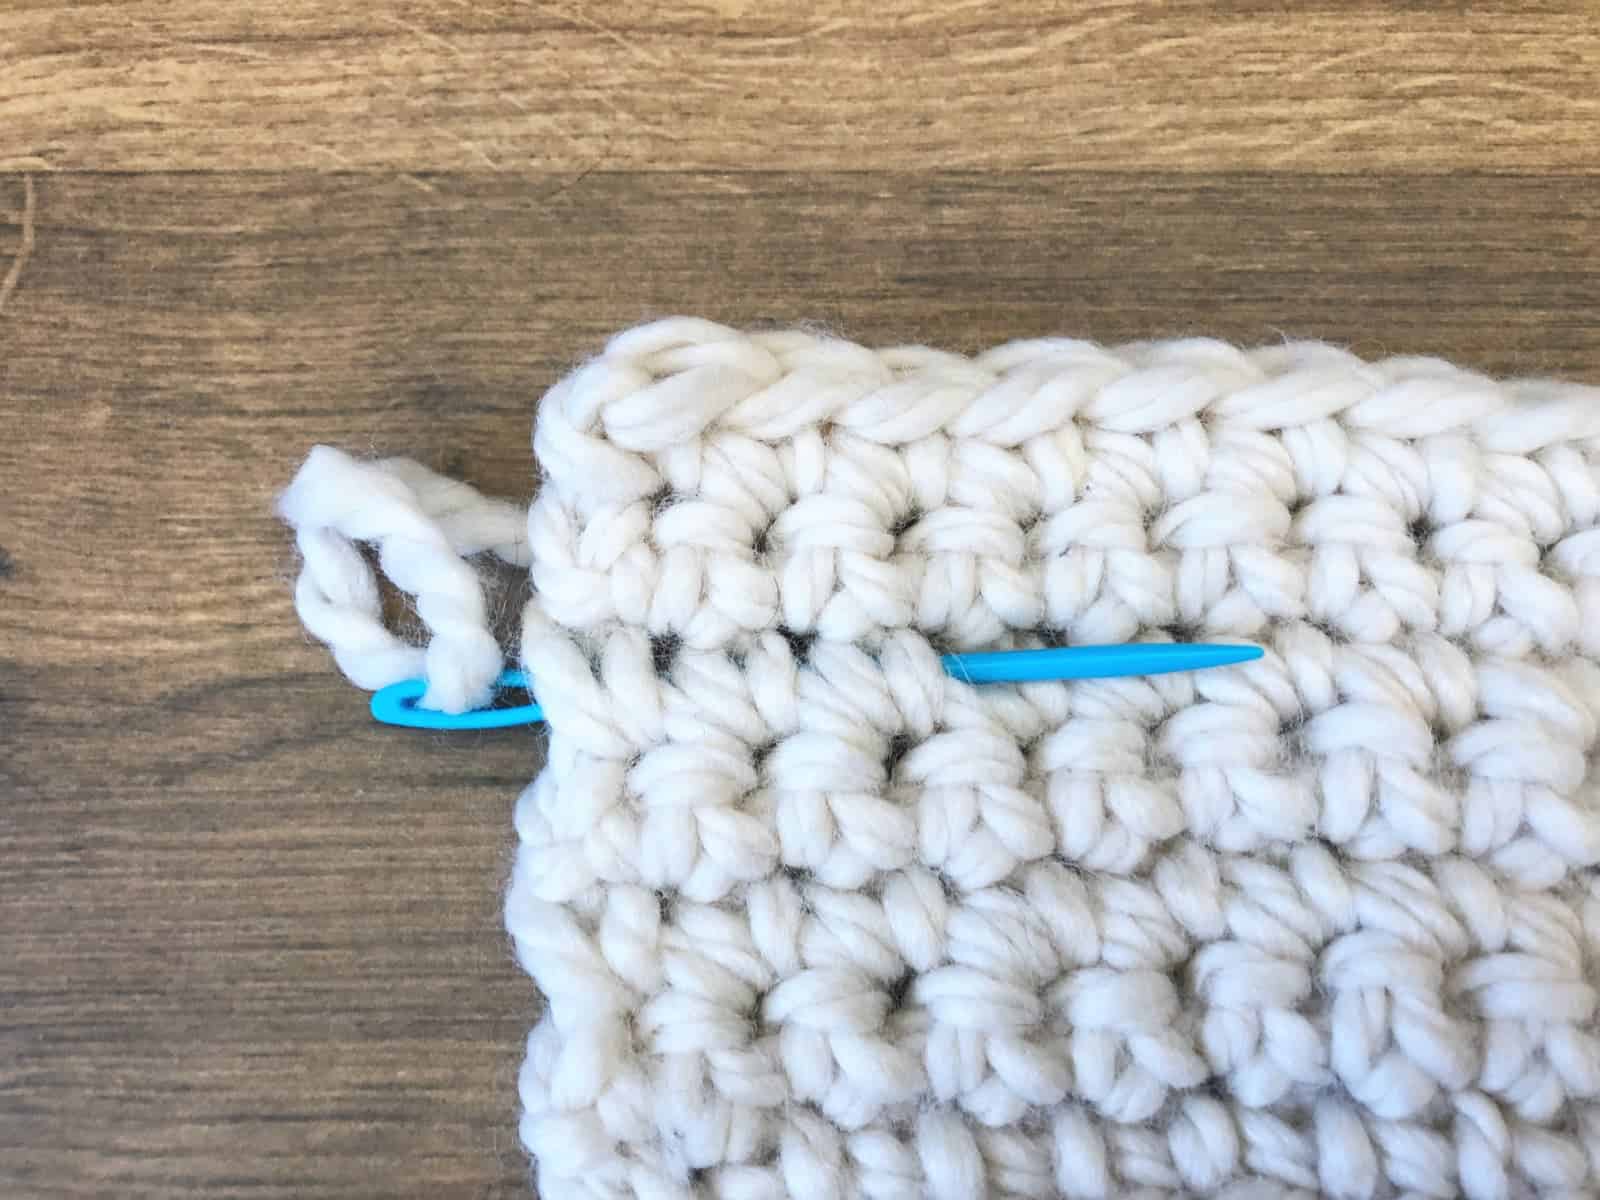 Blue needle sliding between single crochet stitches.